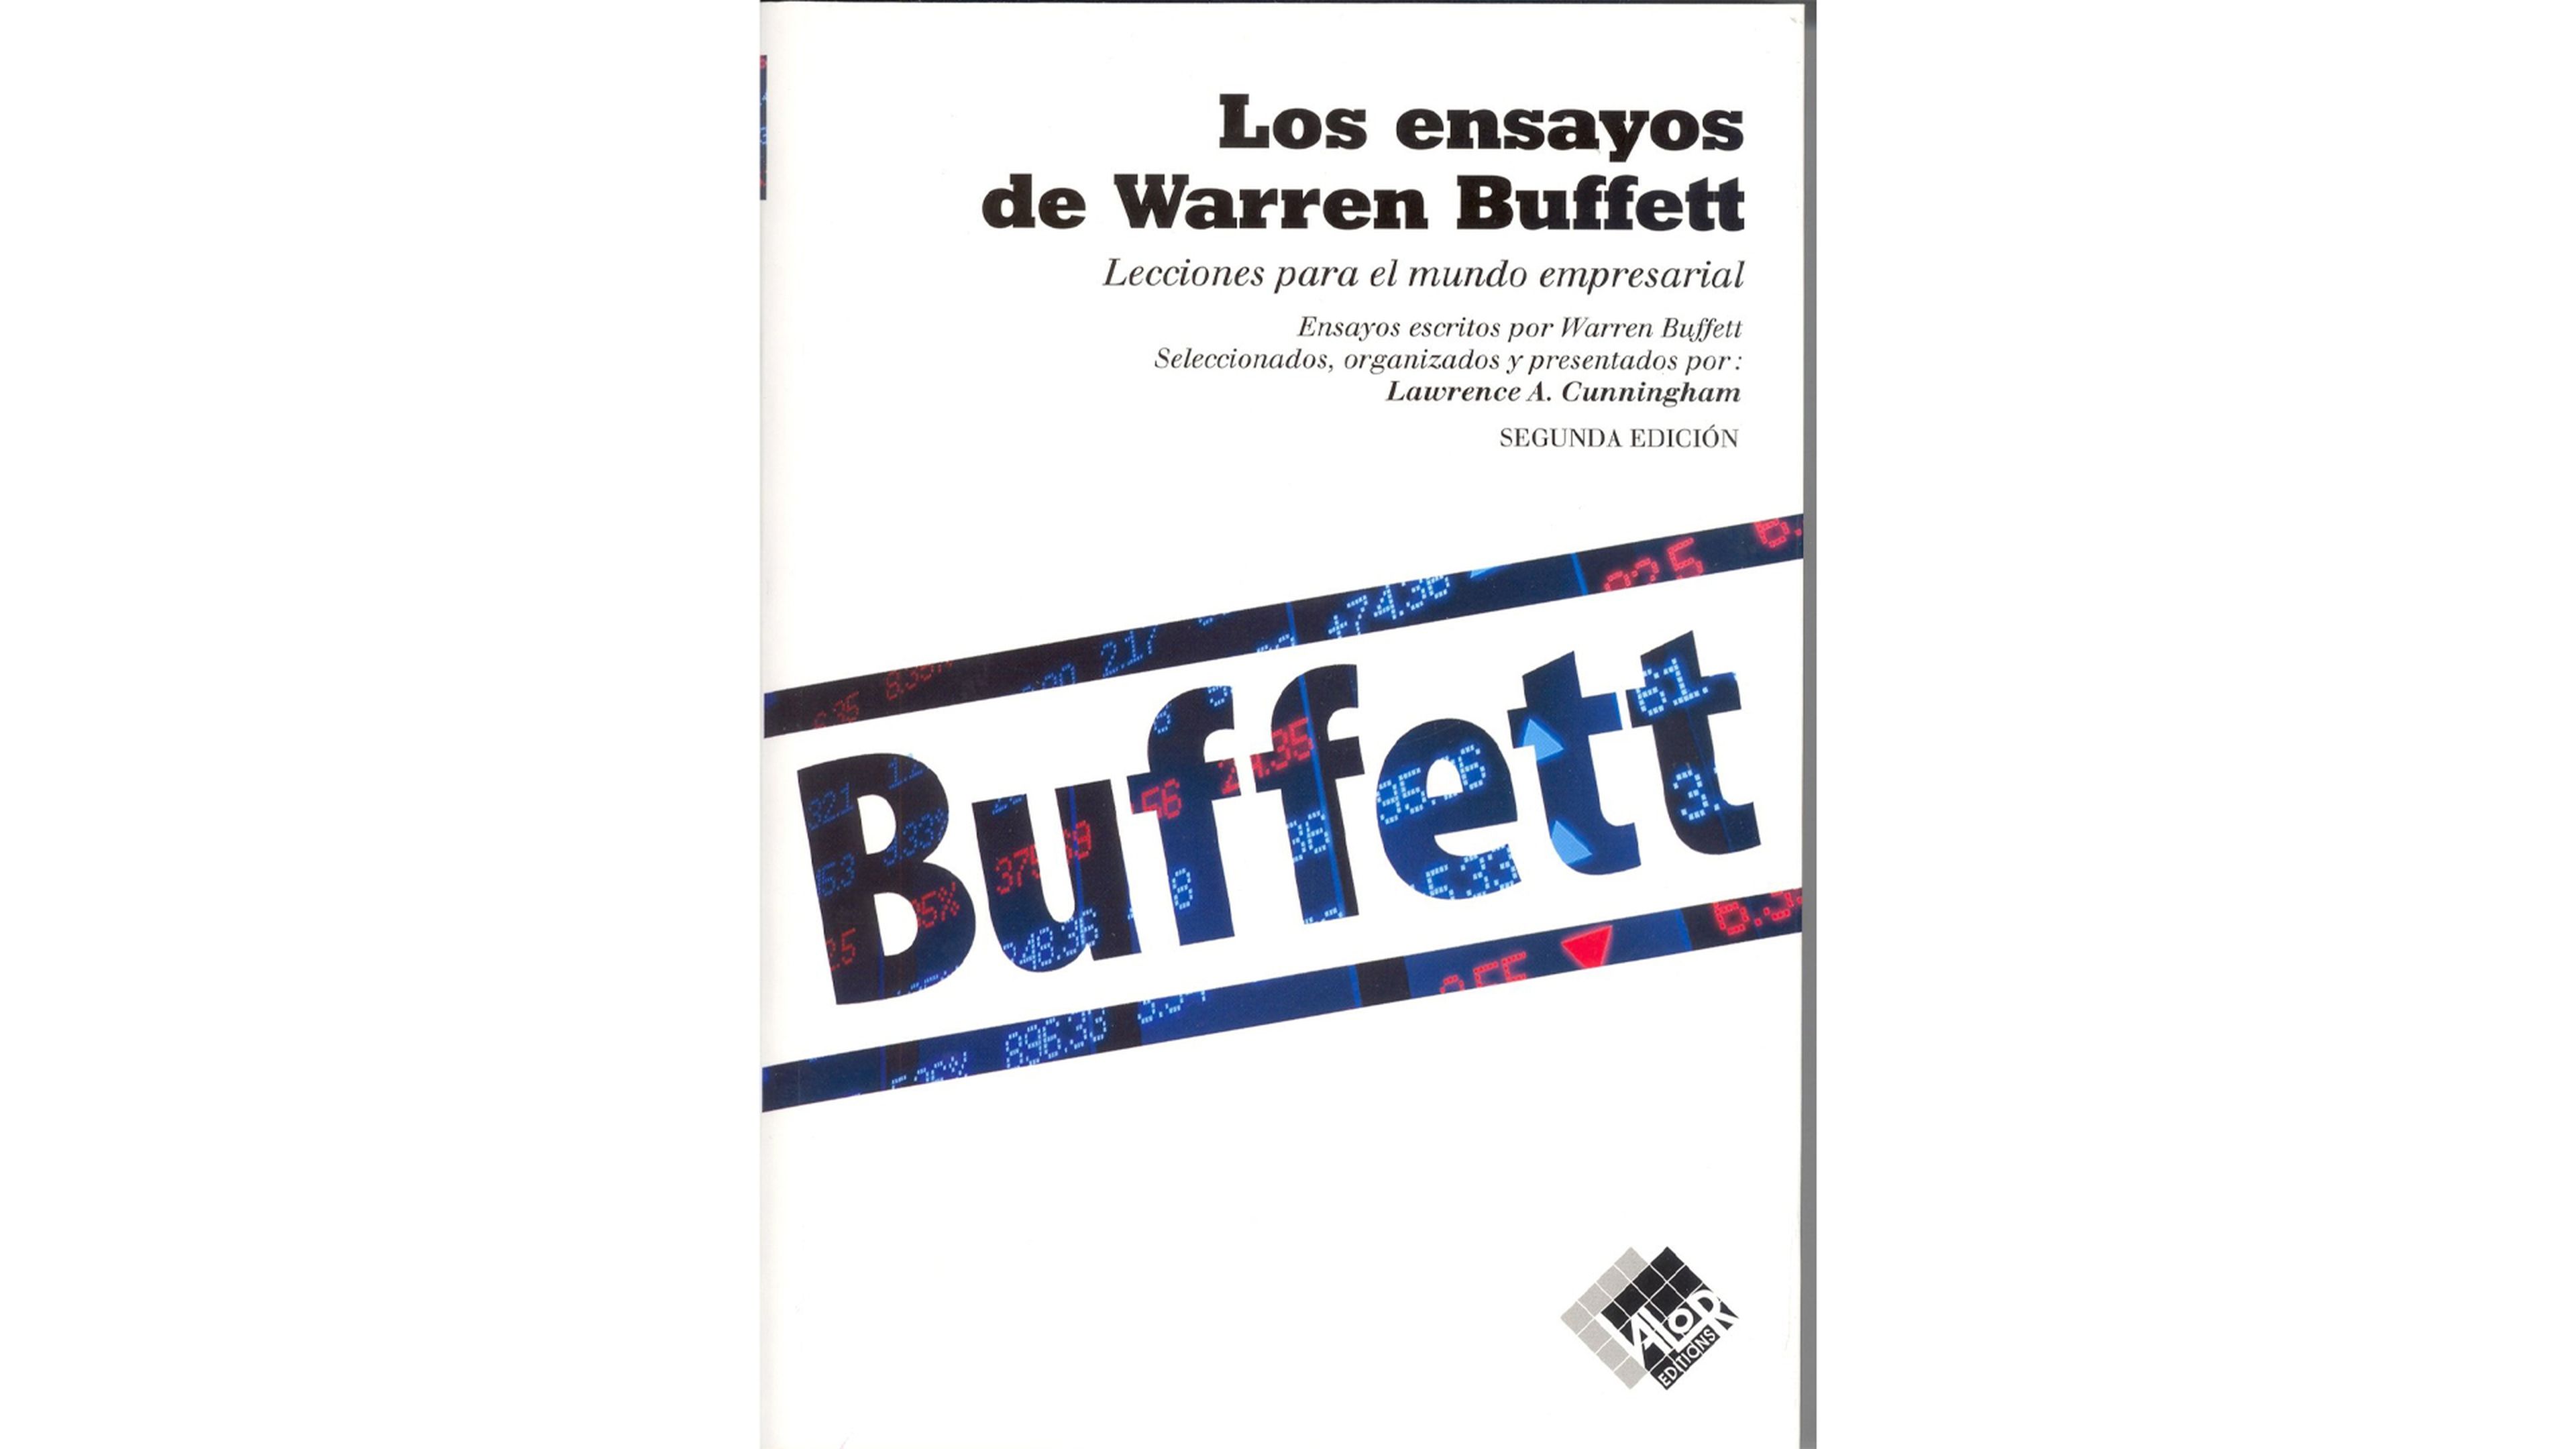 Los ensayos de Warren Buffett